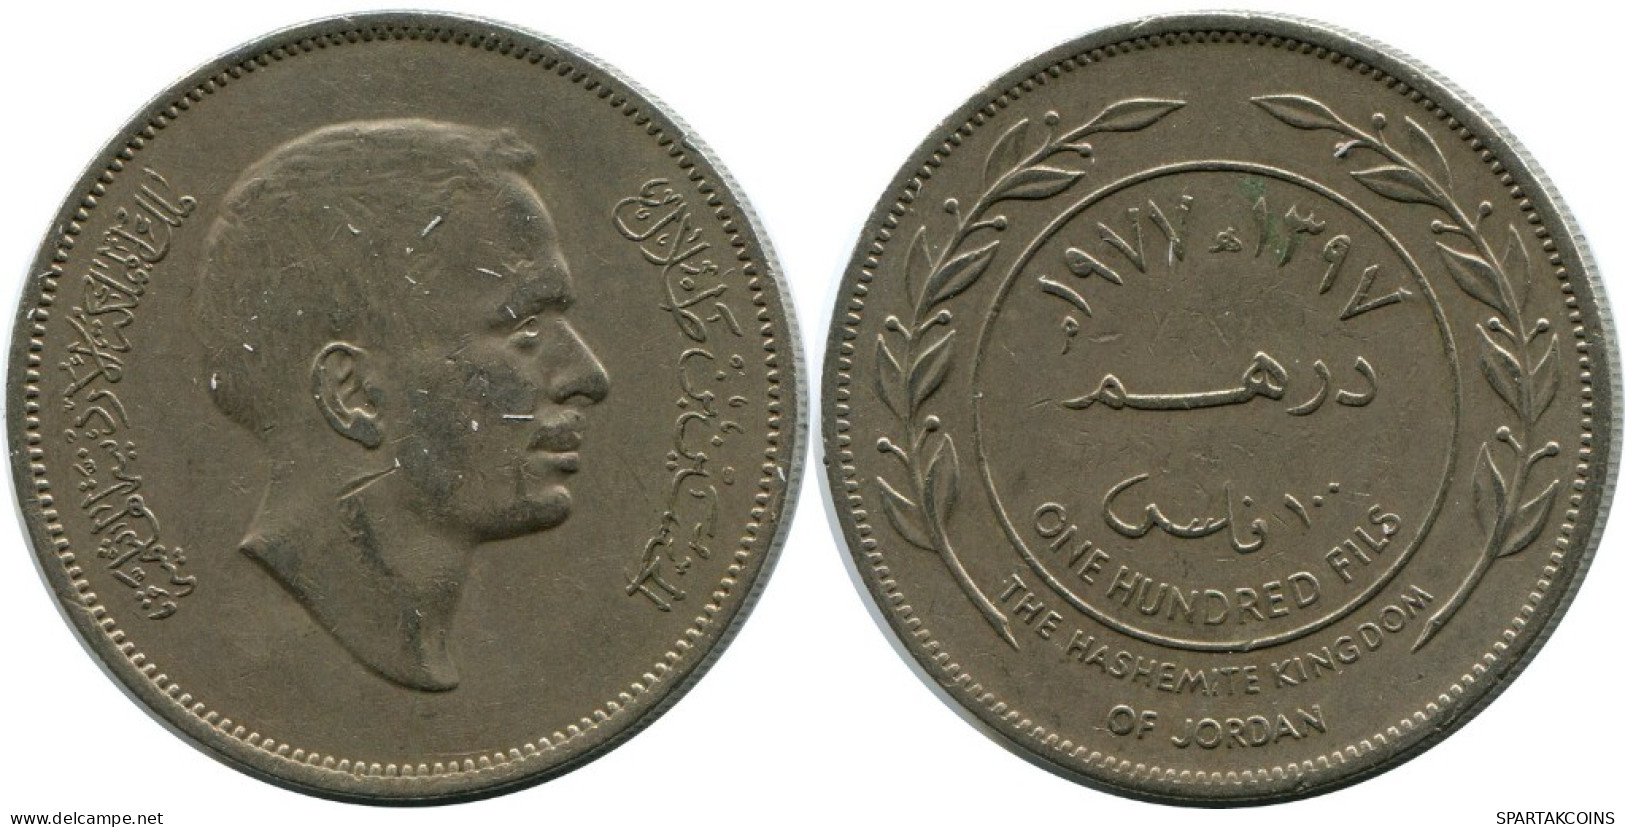 100 FILS 1977 JORDAN Islamic Coin #AK143.U.A - Giordania